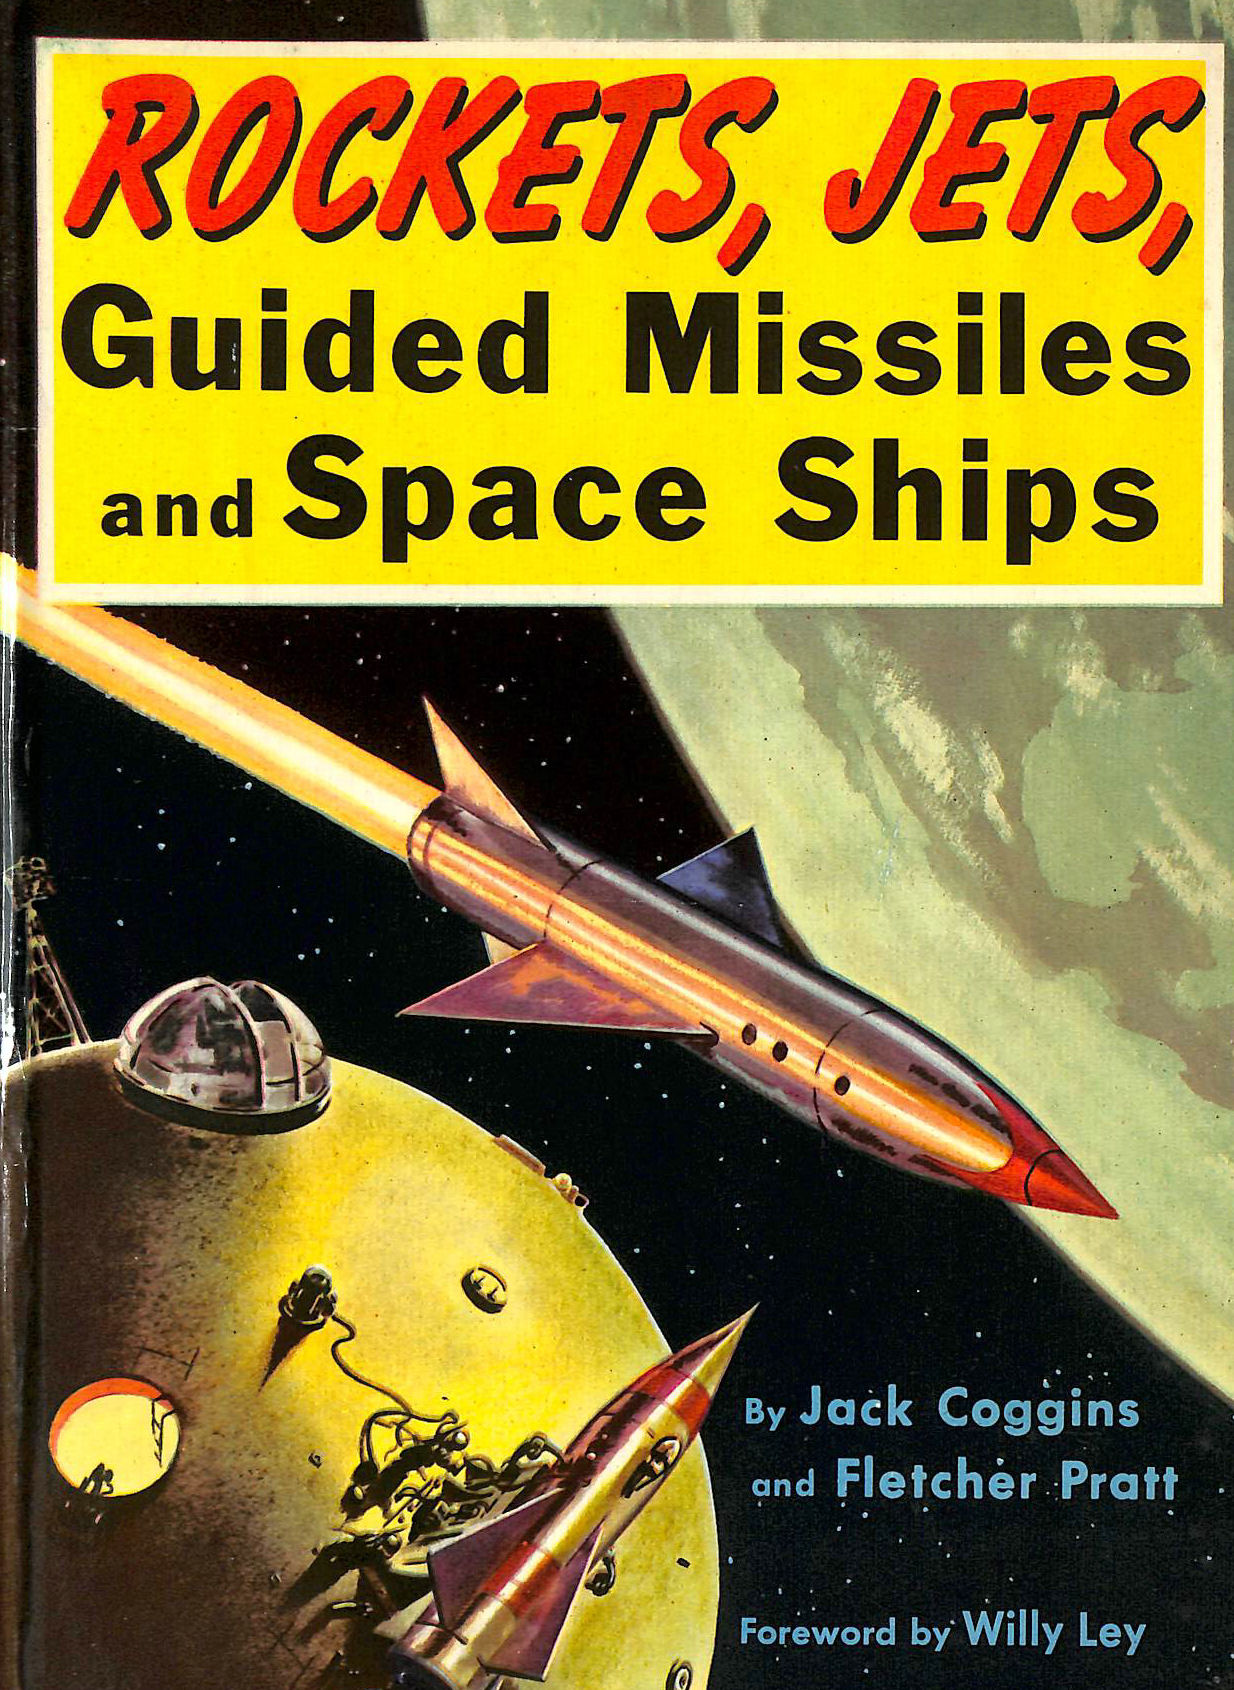 JACK COGGINS, FLETCHER PRATT - Rockets, Jets, Guided Missiles And Space Ships